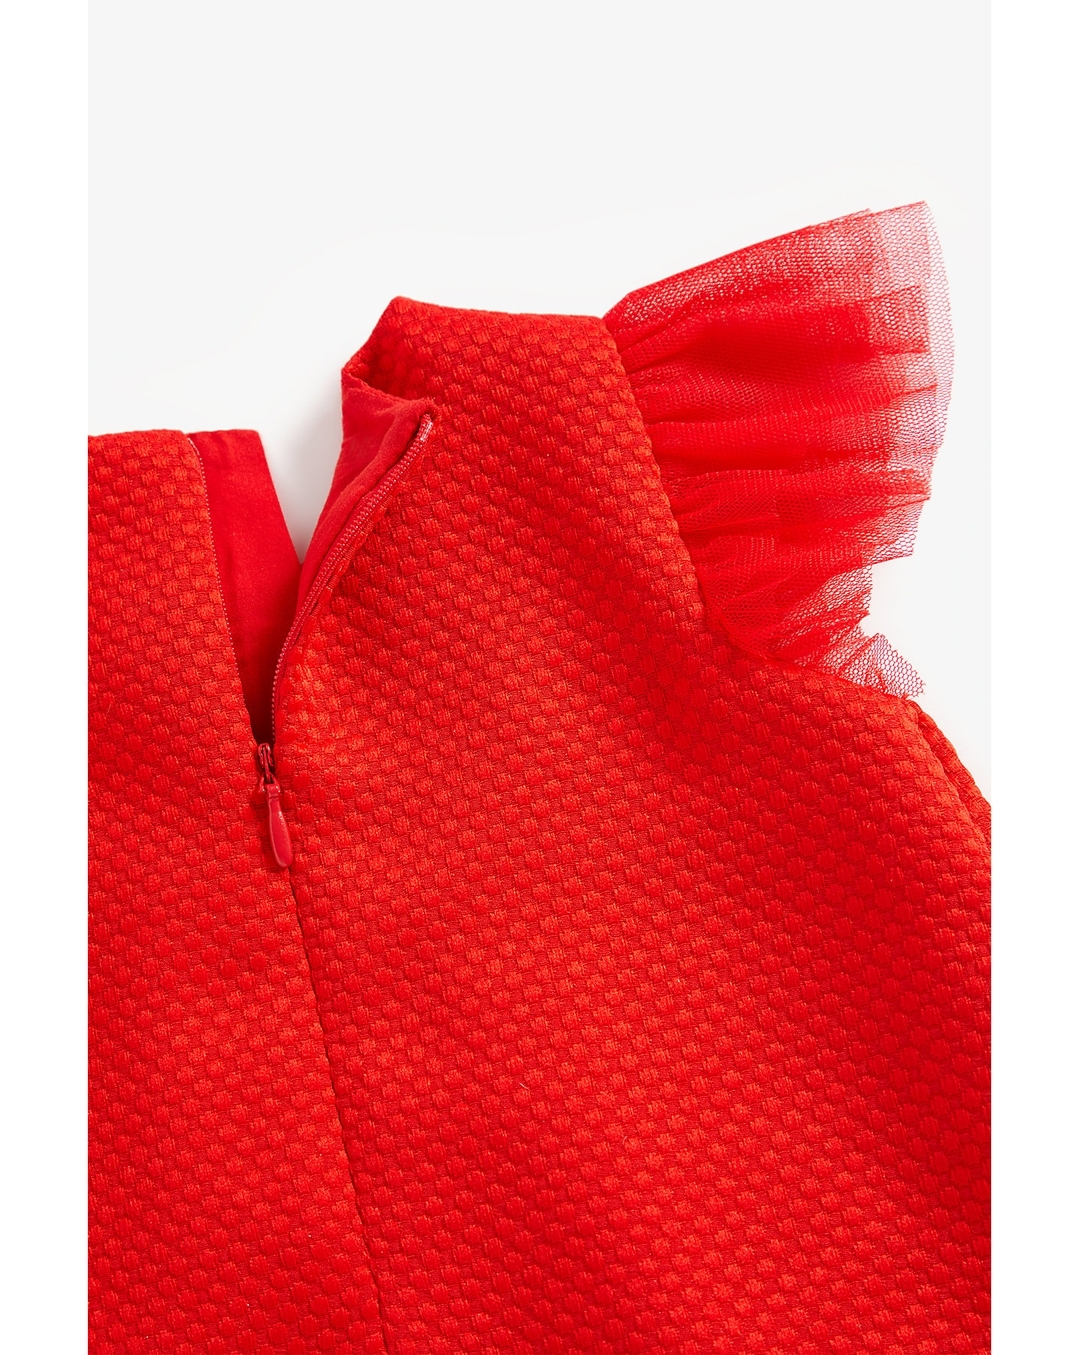 Red Leopard Dress & Textured Leggings -Plus Size Fashion! 